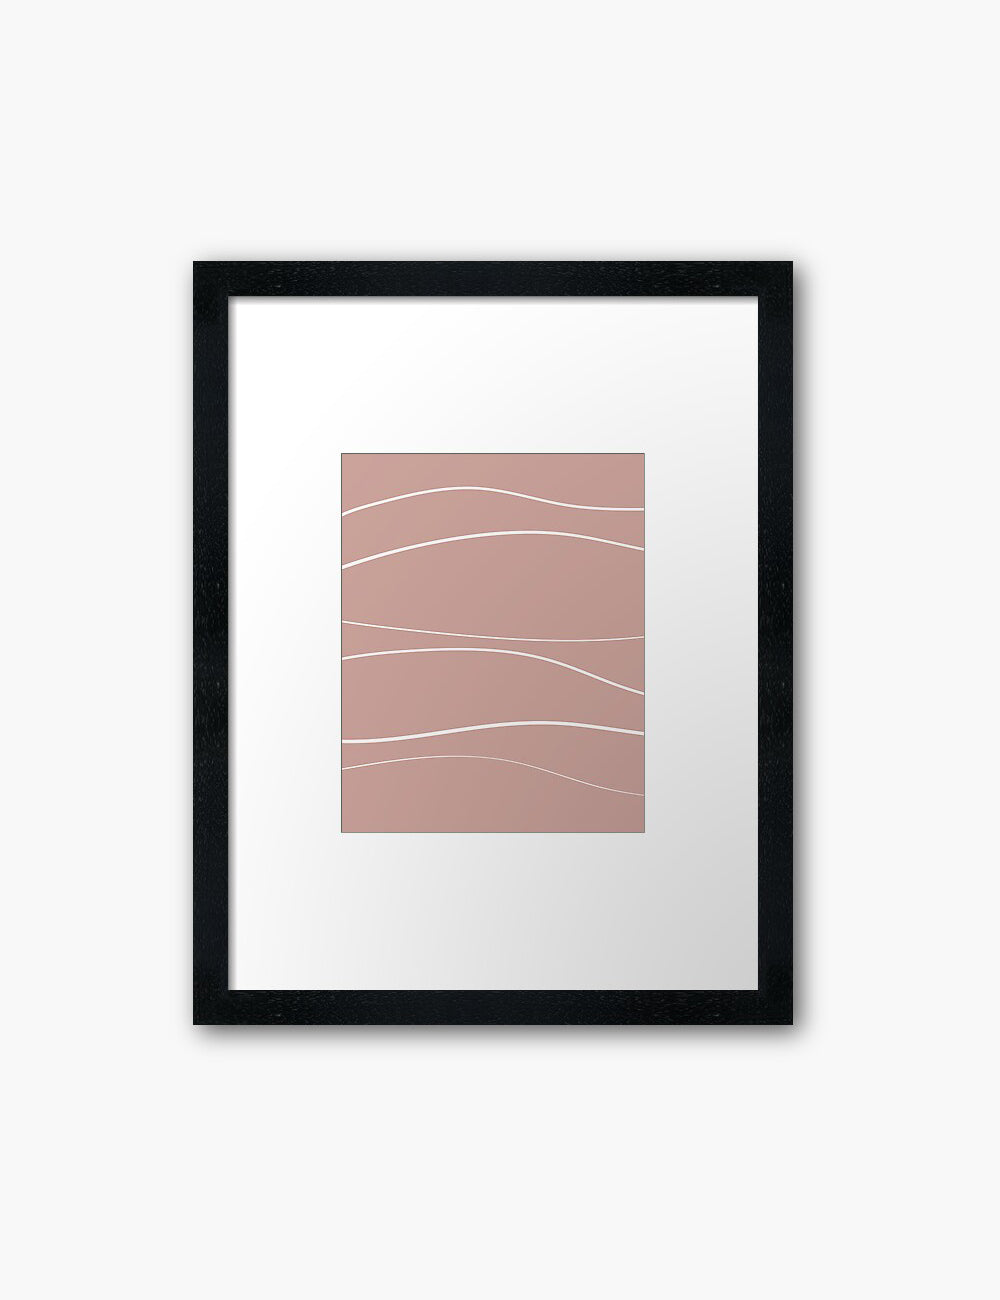 MINIMAL LINE ART. Abstract Waves. Boho. Blush. Rose. Pale Red. Printable Wall Art Illustration. - PAPER MOON Art & Design